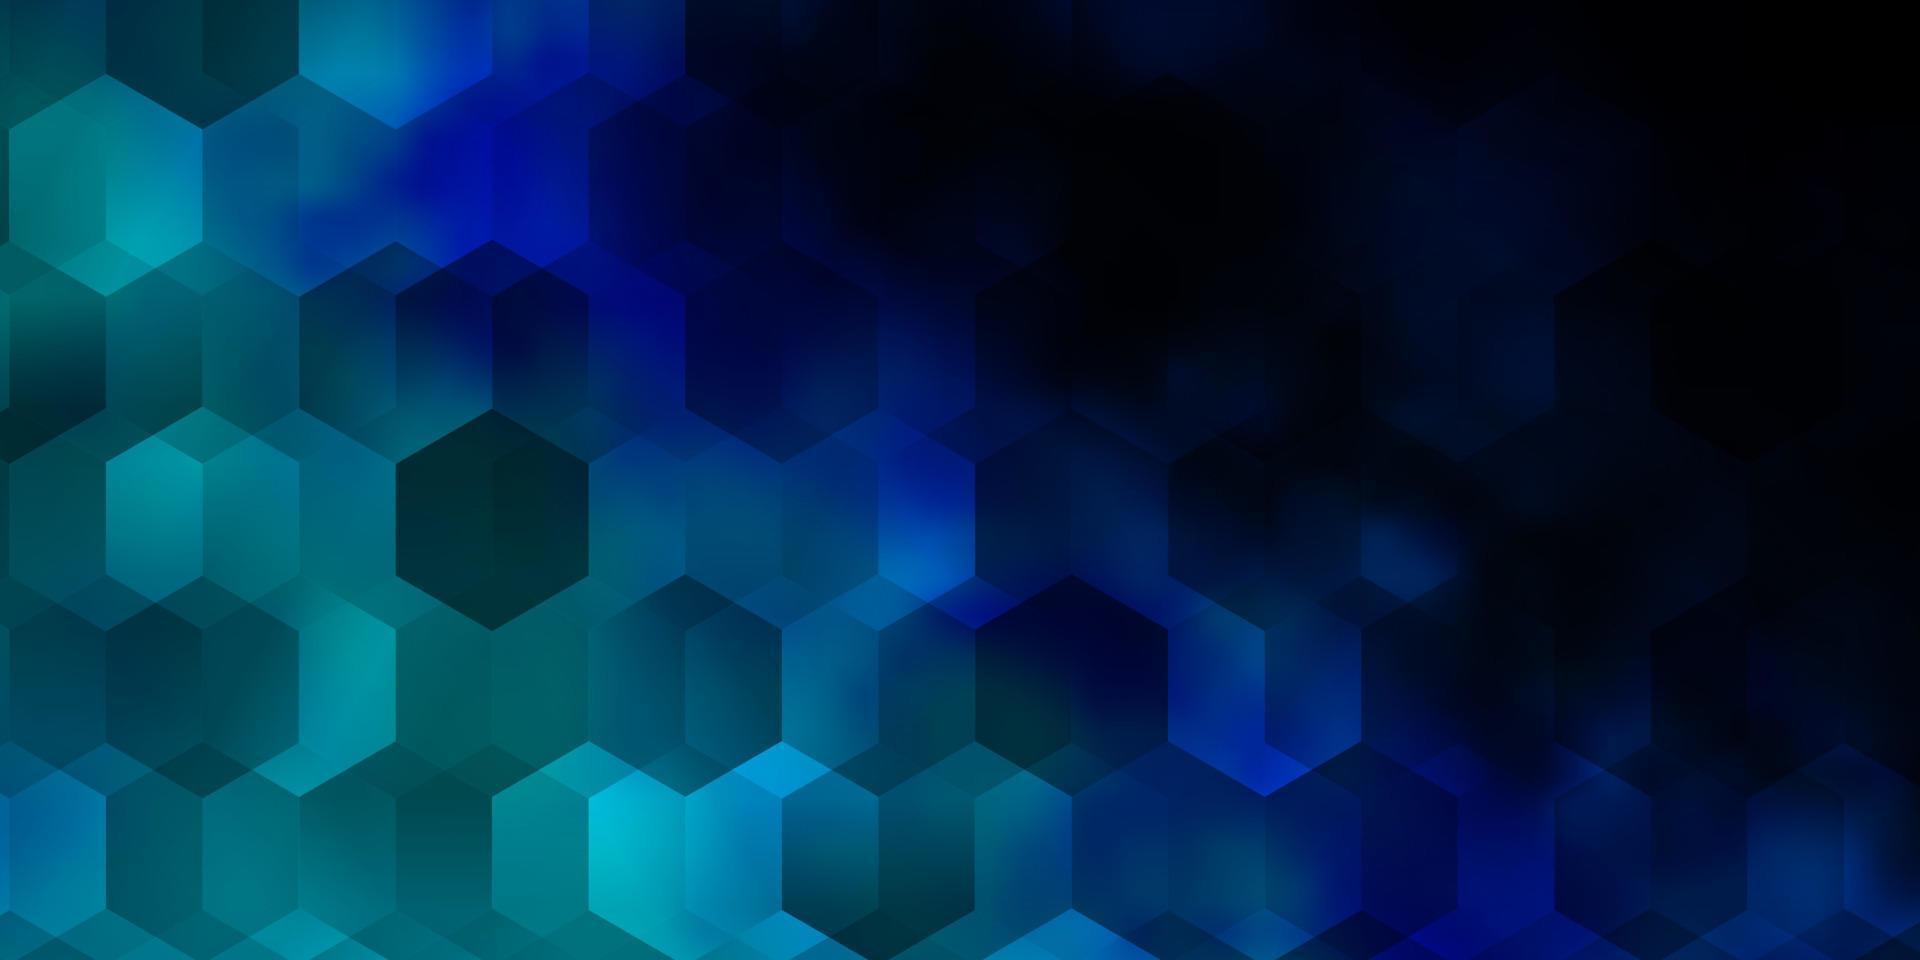 diseño de vector azul oscuro con formas hexagonales.